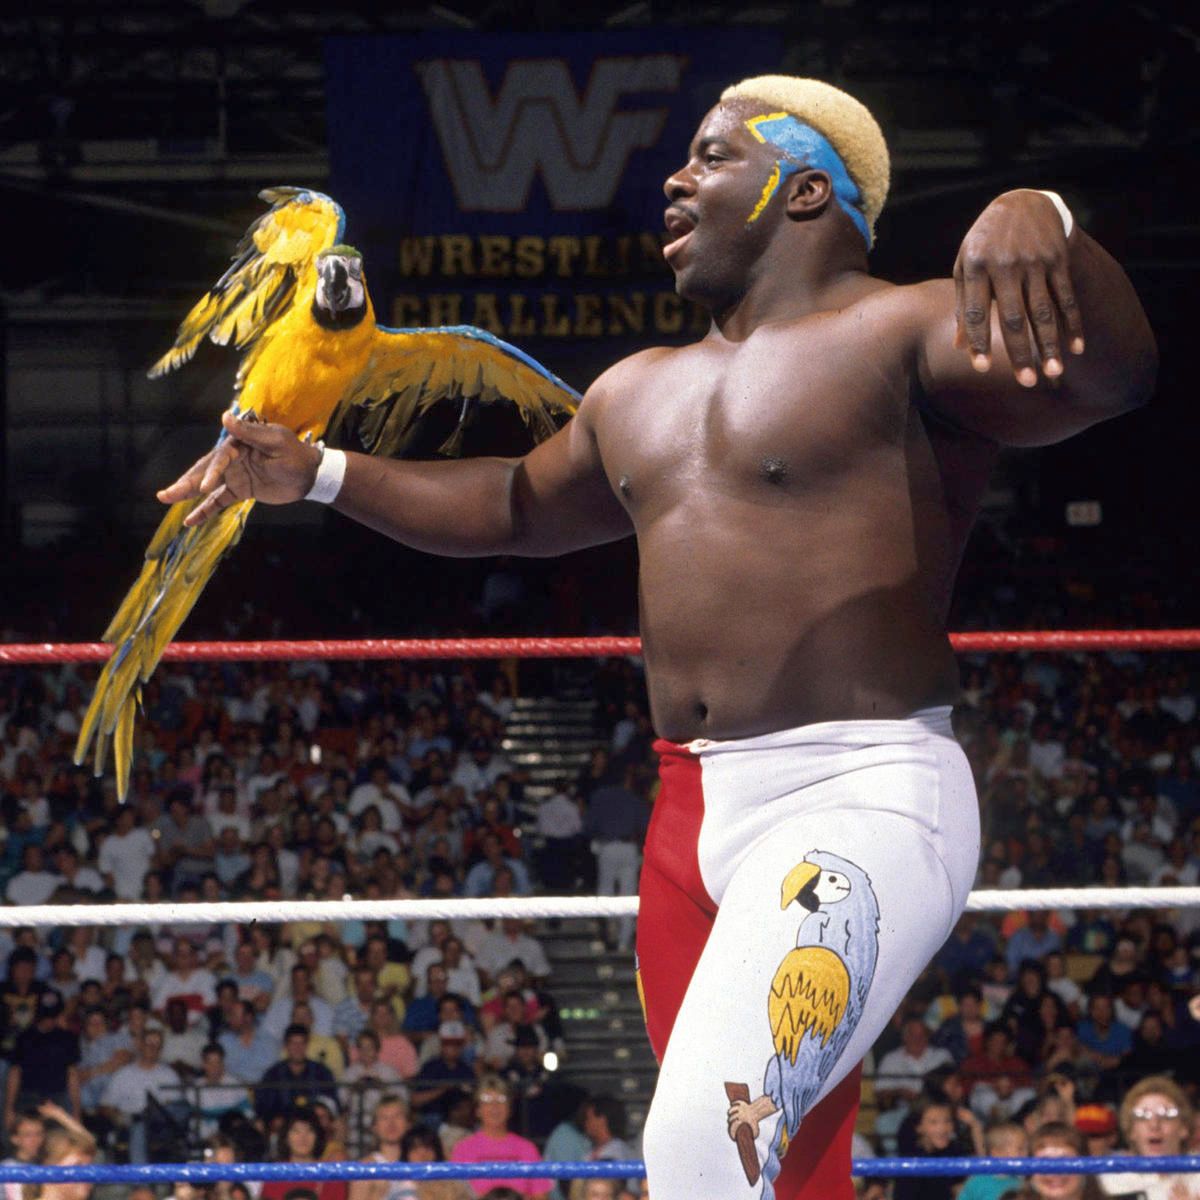 🎶 'Everybody get up, everybody get down, you'd better strut your stuff because the bird man's in town...' 🎶🦜 @wwekokobware #WWF #WWE #Wrestling #KokoBWare